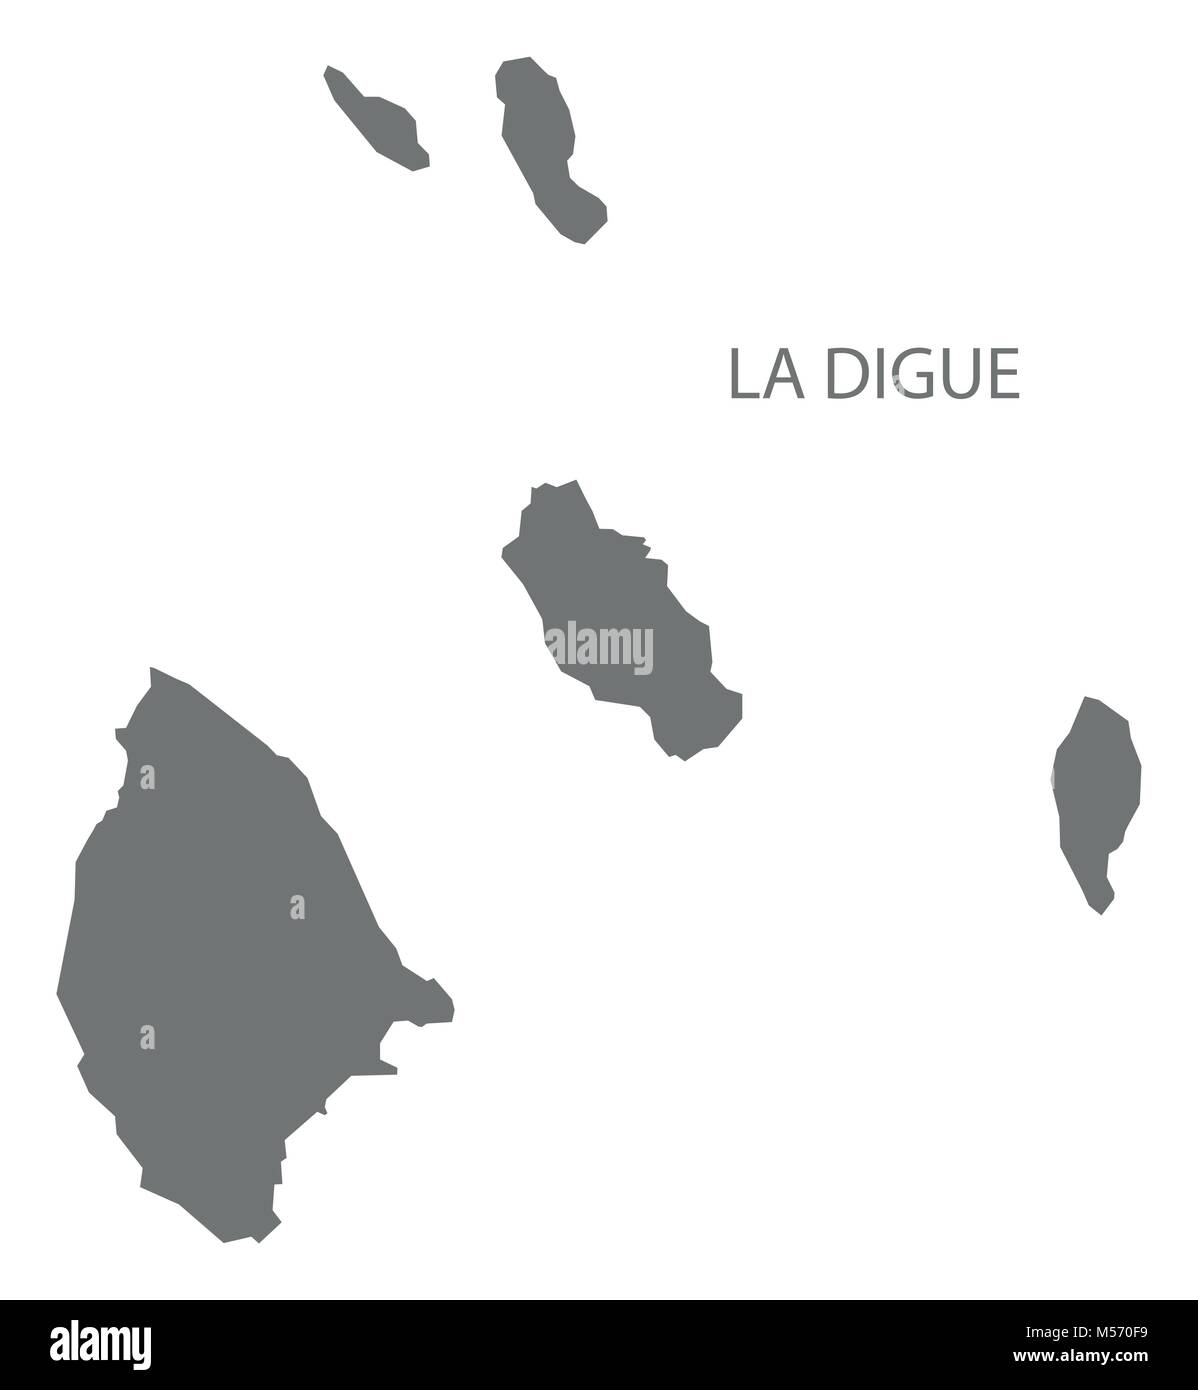 La Digue map of Seychelles grey illustration Stock Vector Image & Art ...